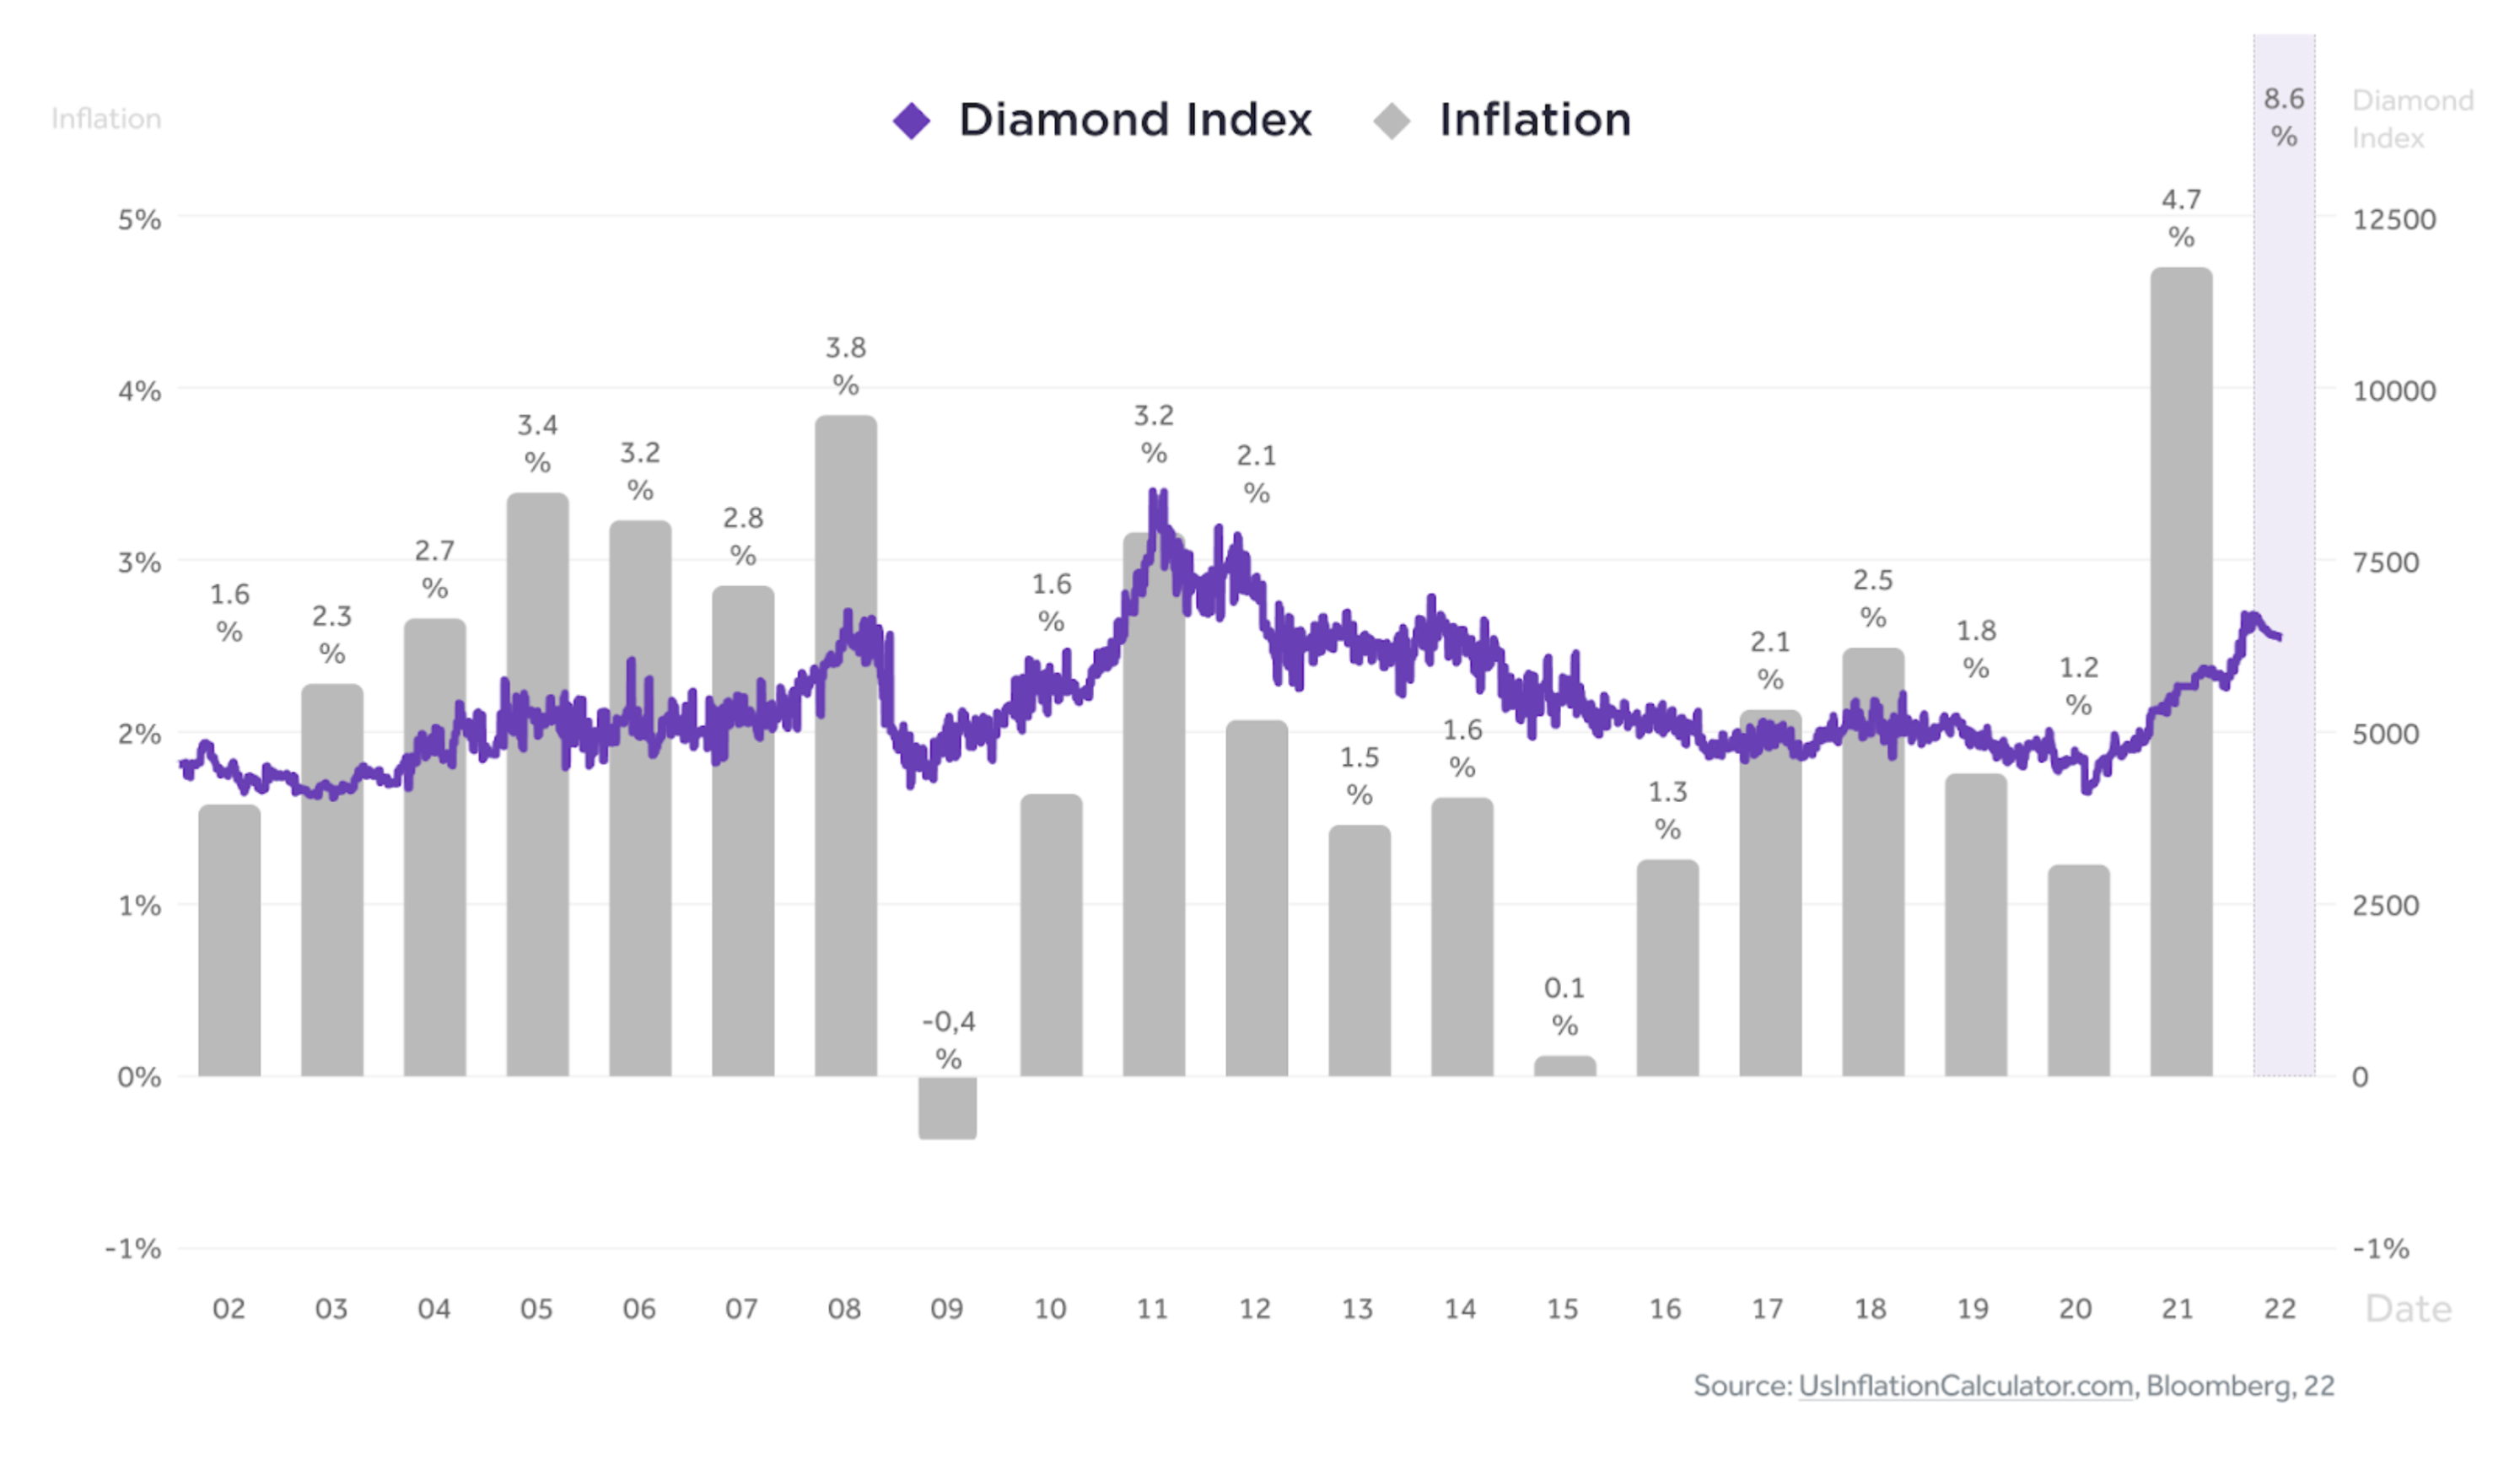 DiamondIndexandInflation